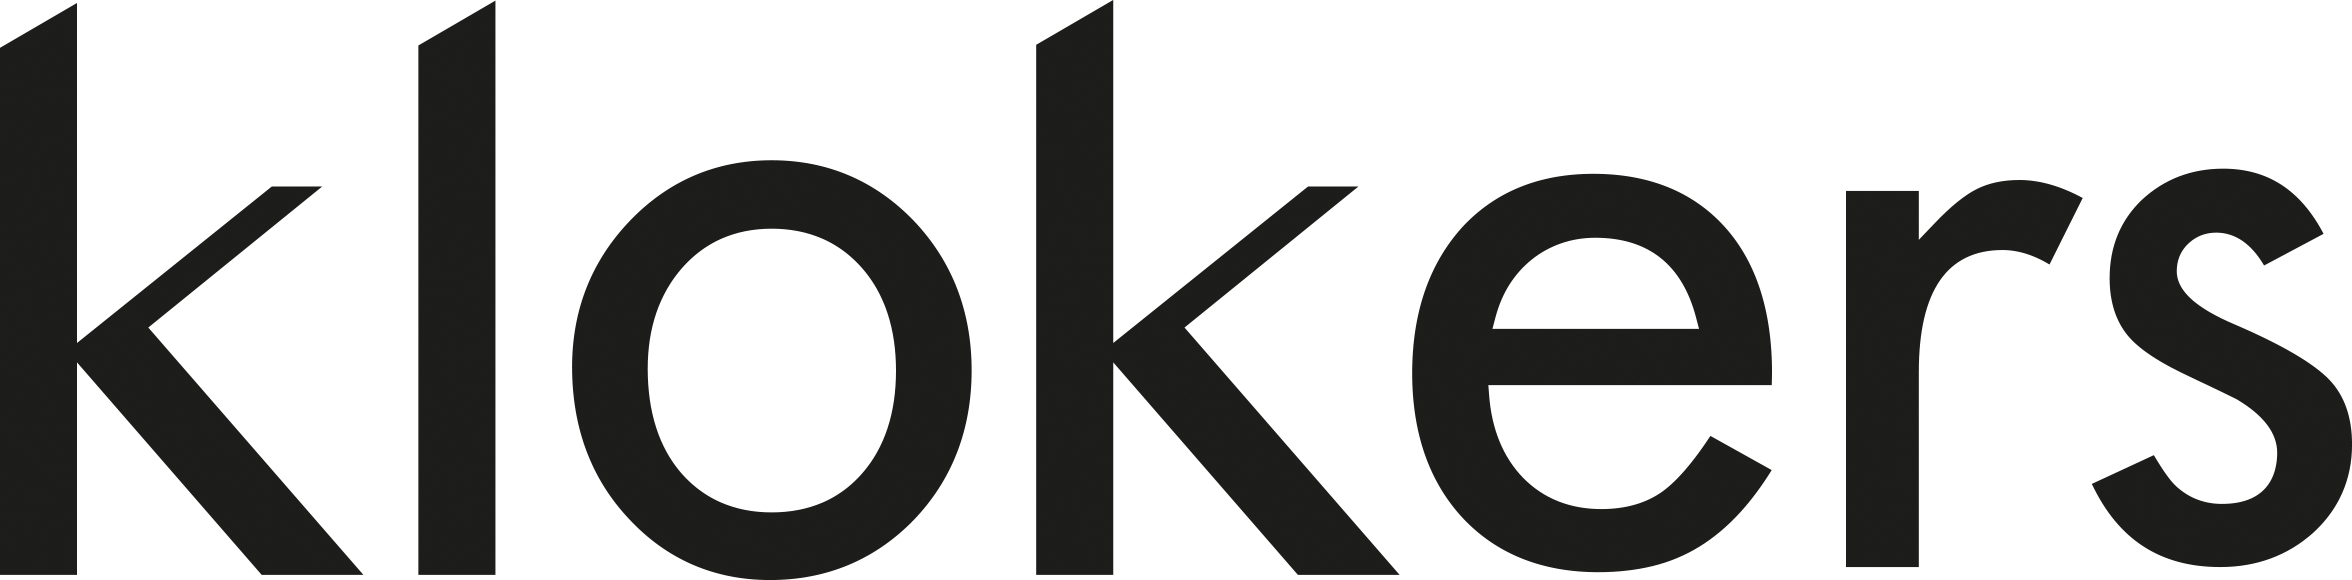 Klokers Will Launch on Kickstarter on Nov 7, 17h00 (utc+1) its New ...